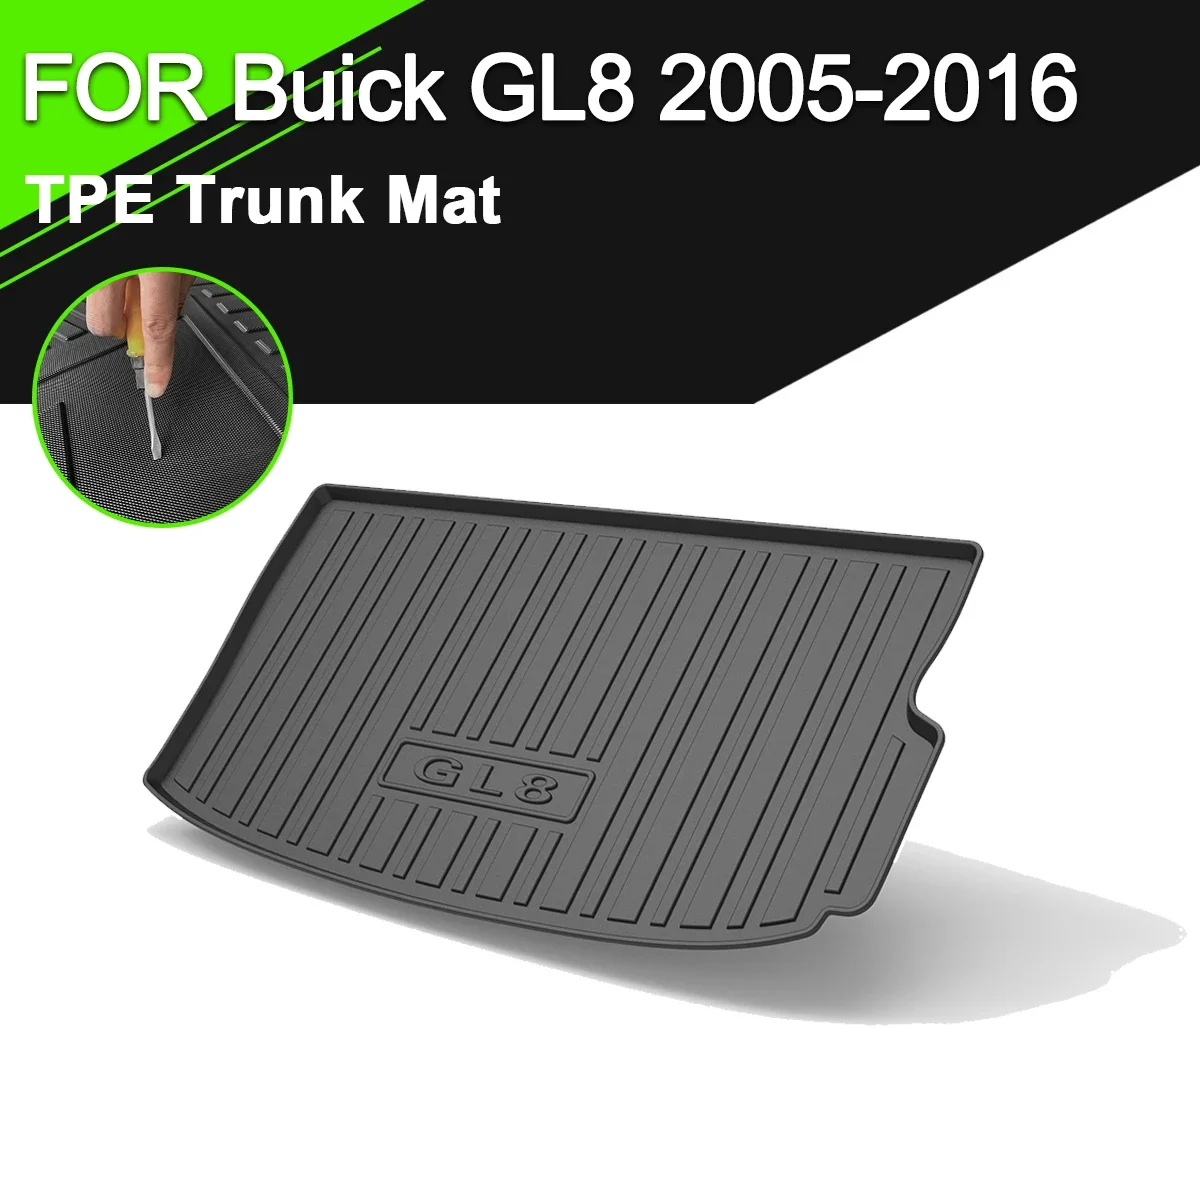 Tapete tronco TPE PARA o Buick GL8 2005-2016 Carro Impermeável, antiderrapante de Borracha, Carga de Forro de Acessórios